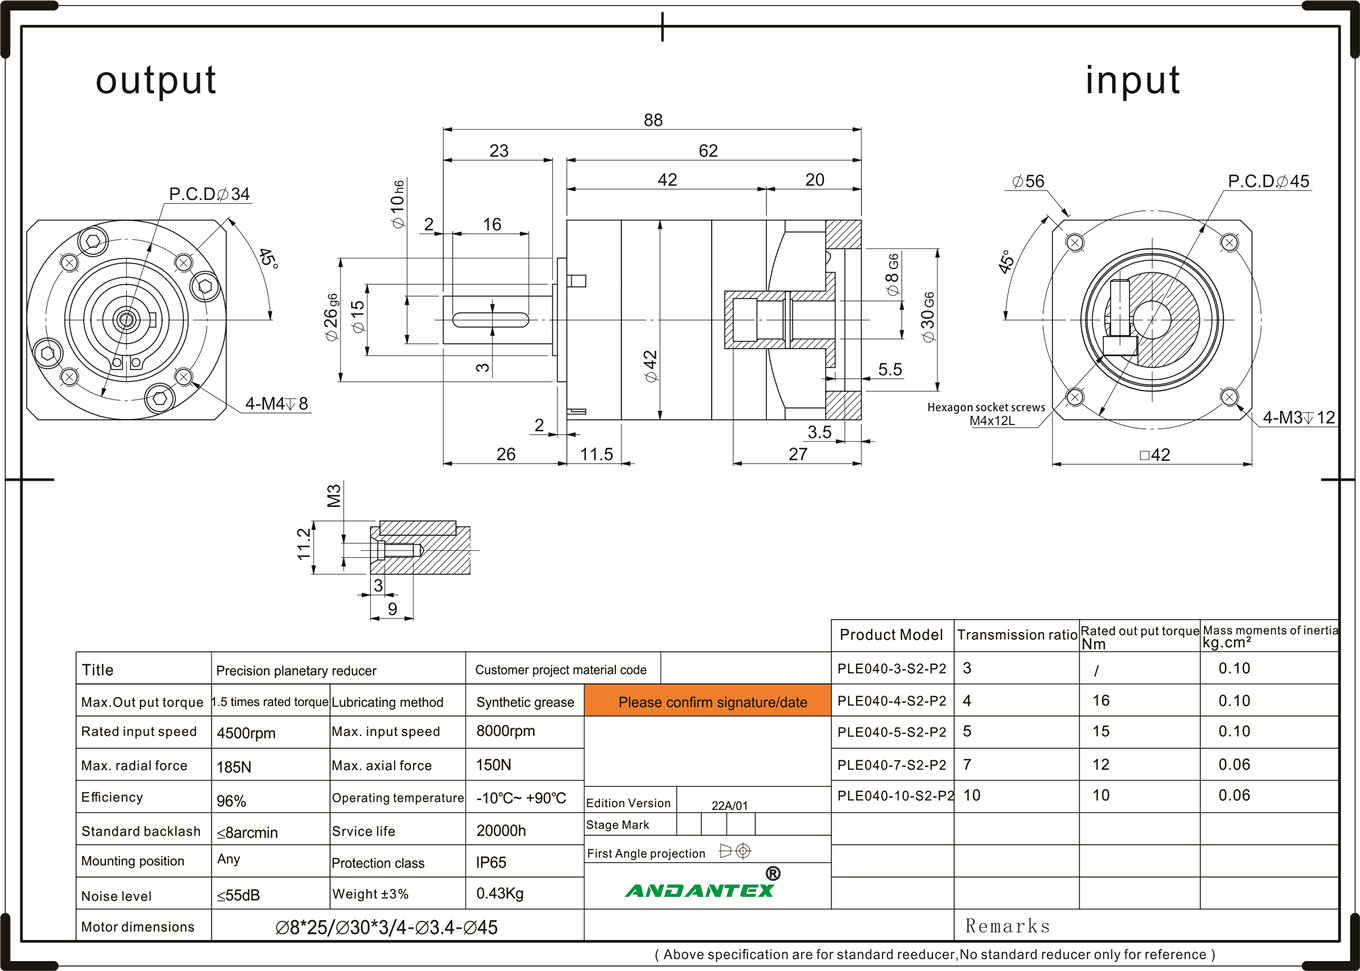 Andantex ple040-7-s2-p2 riduttori planetari di serie standard per applicazioni in l'industria elettronica-01